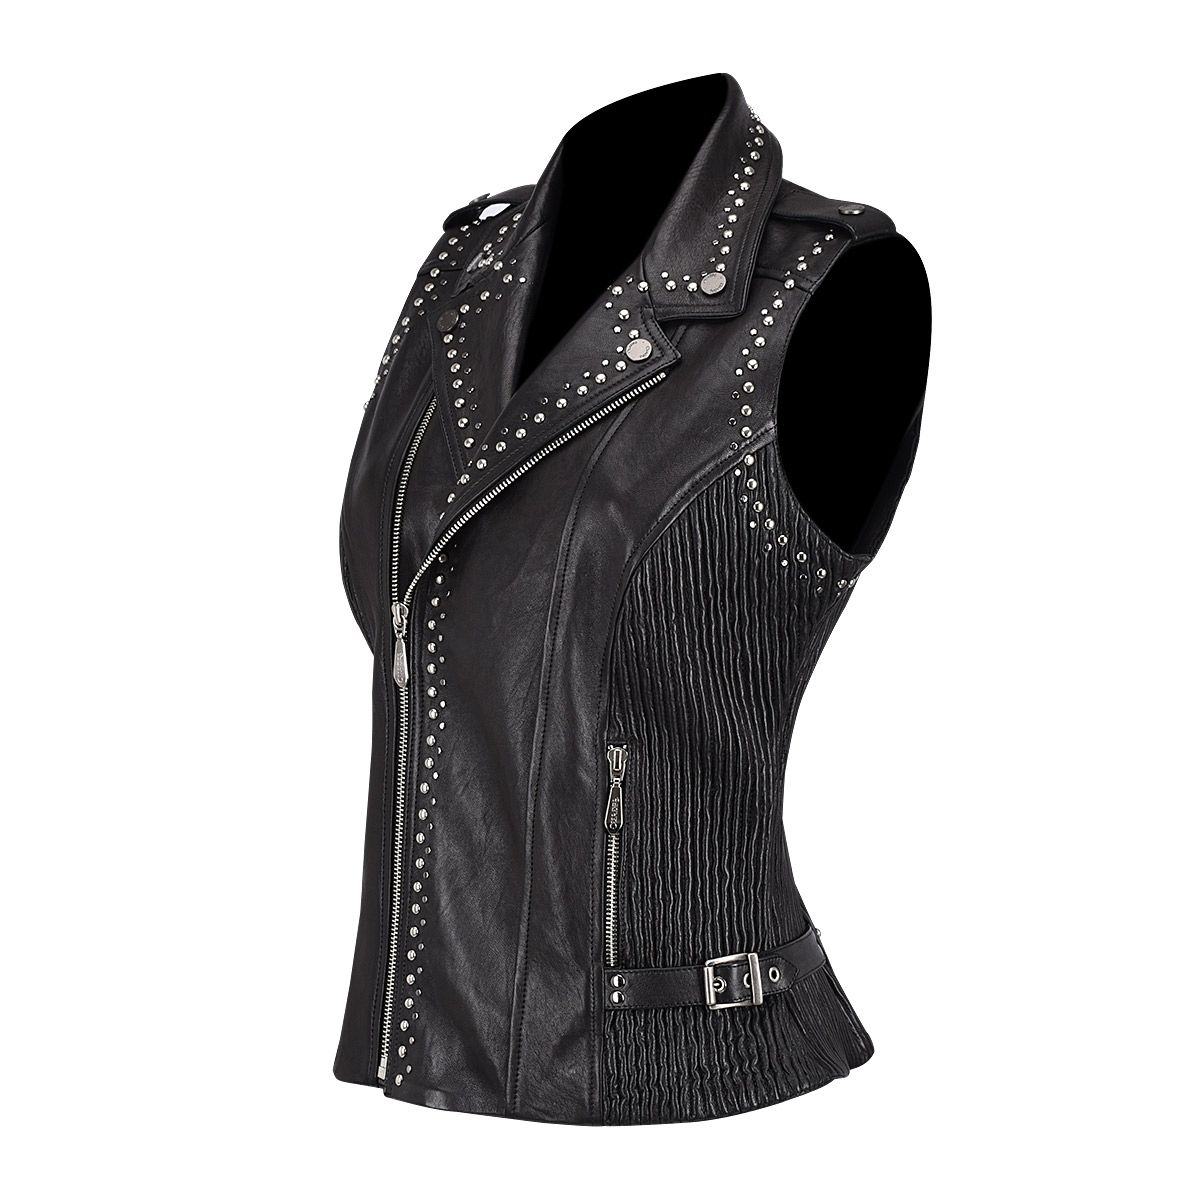 M286COC - Cuadra black dress fashion cowhide leather vest for women-Kuet.us - Cuadra Boots - Western Cowboy, Casual Fashion and Dress Boots